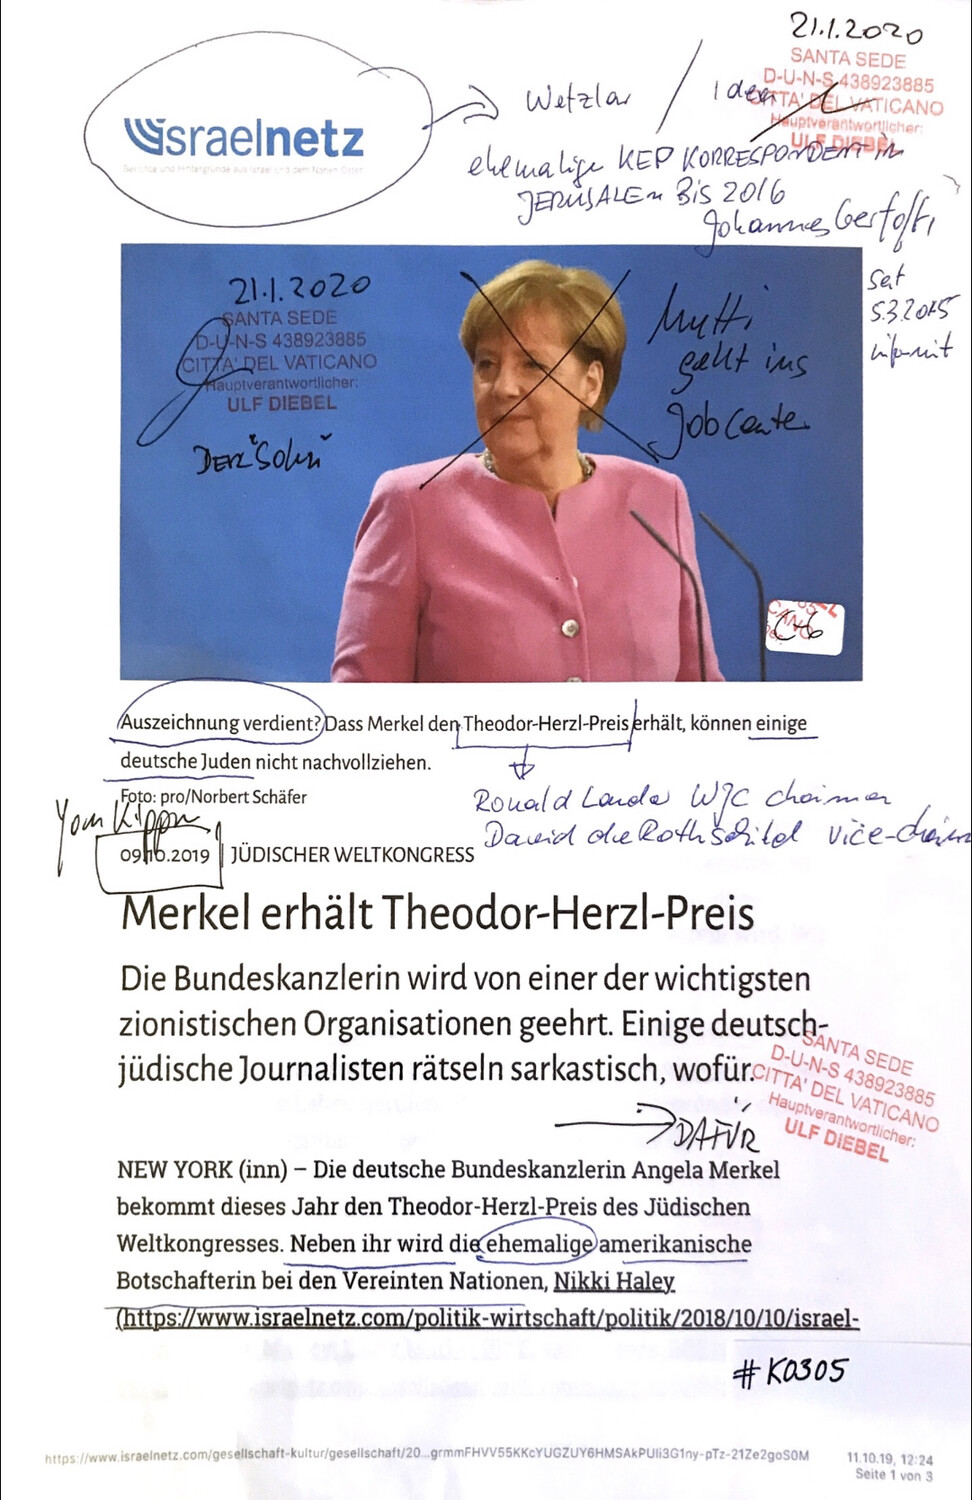 #K0305 l israelnetz - Jüdischer Weltkongress l Merkel erhält Theodor-Herzl Preis 